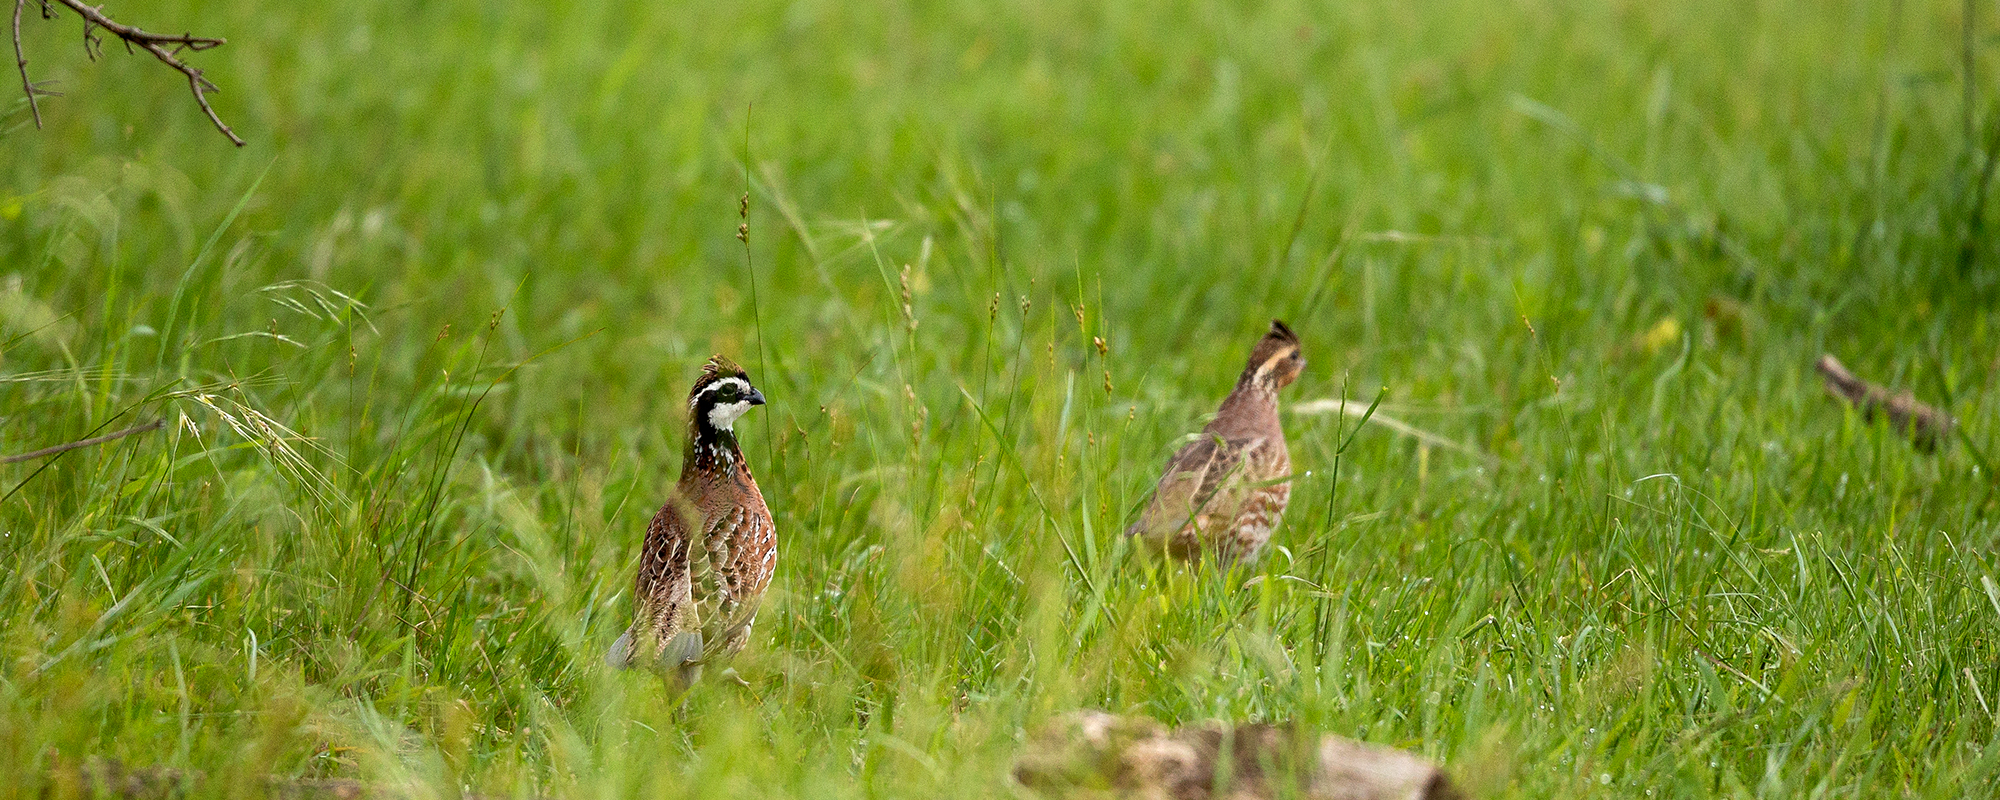 Pheasants in pasture